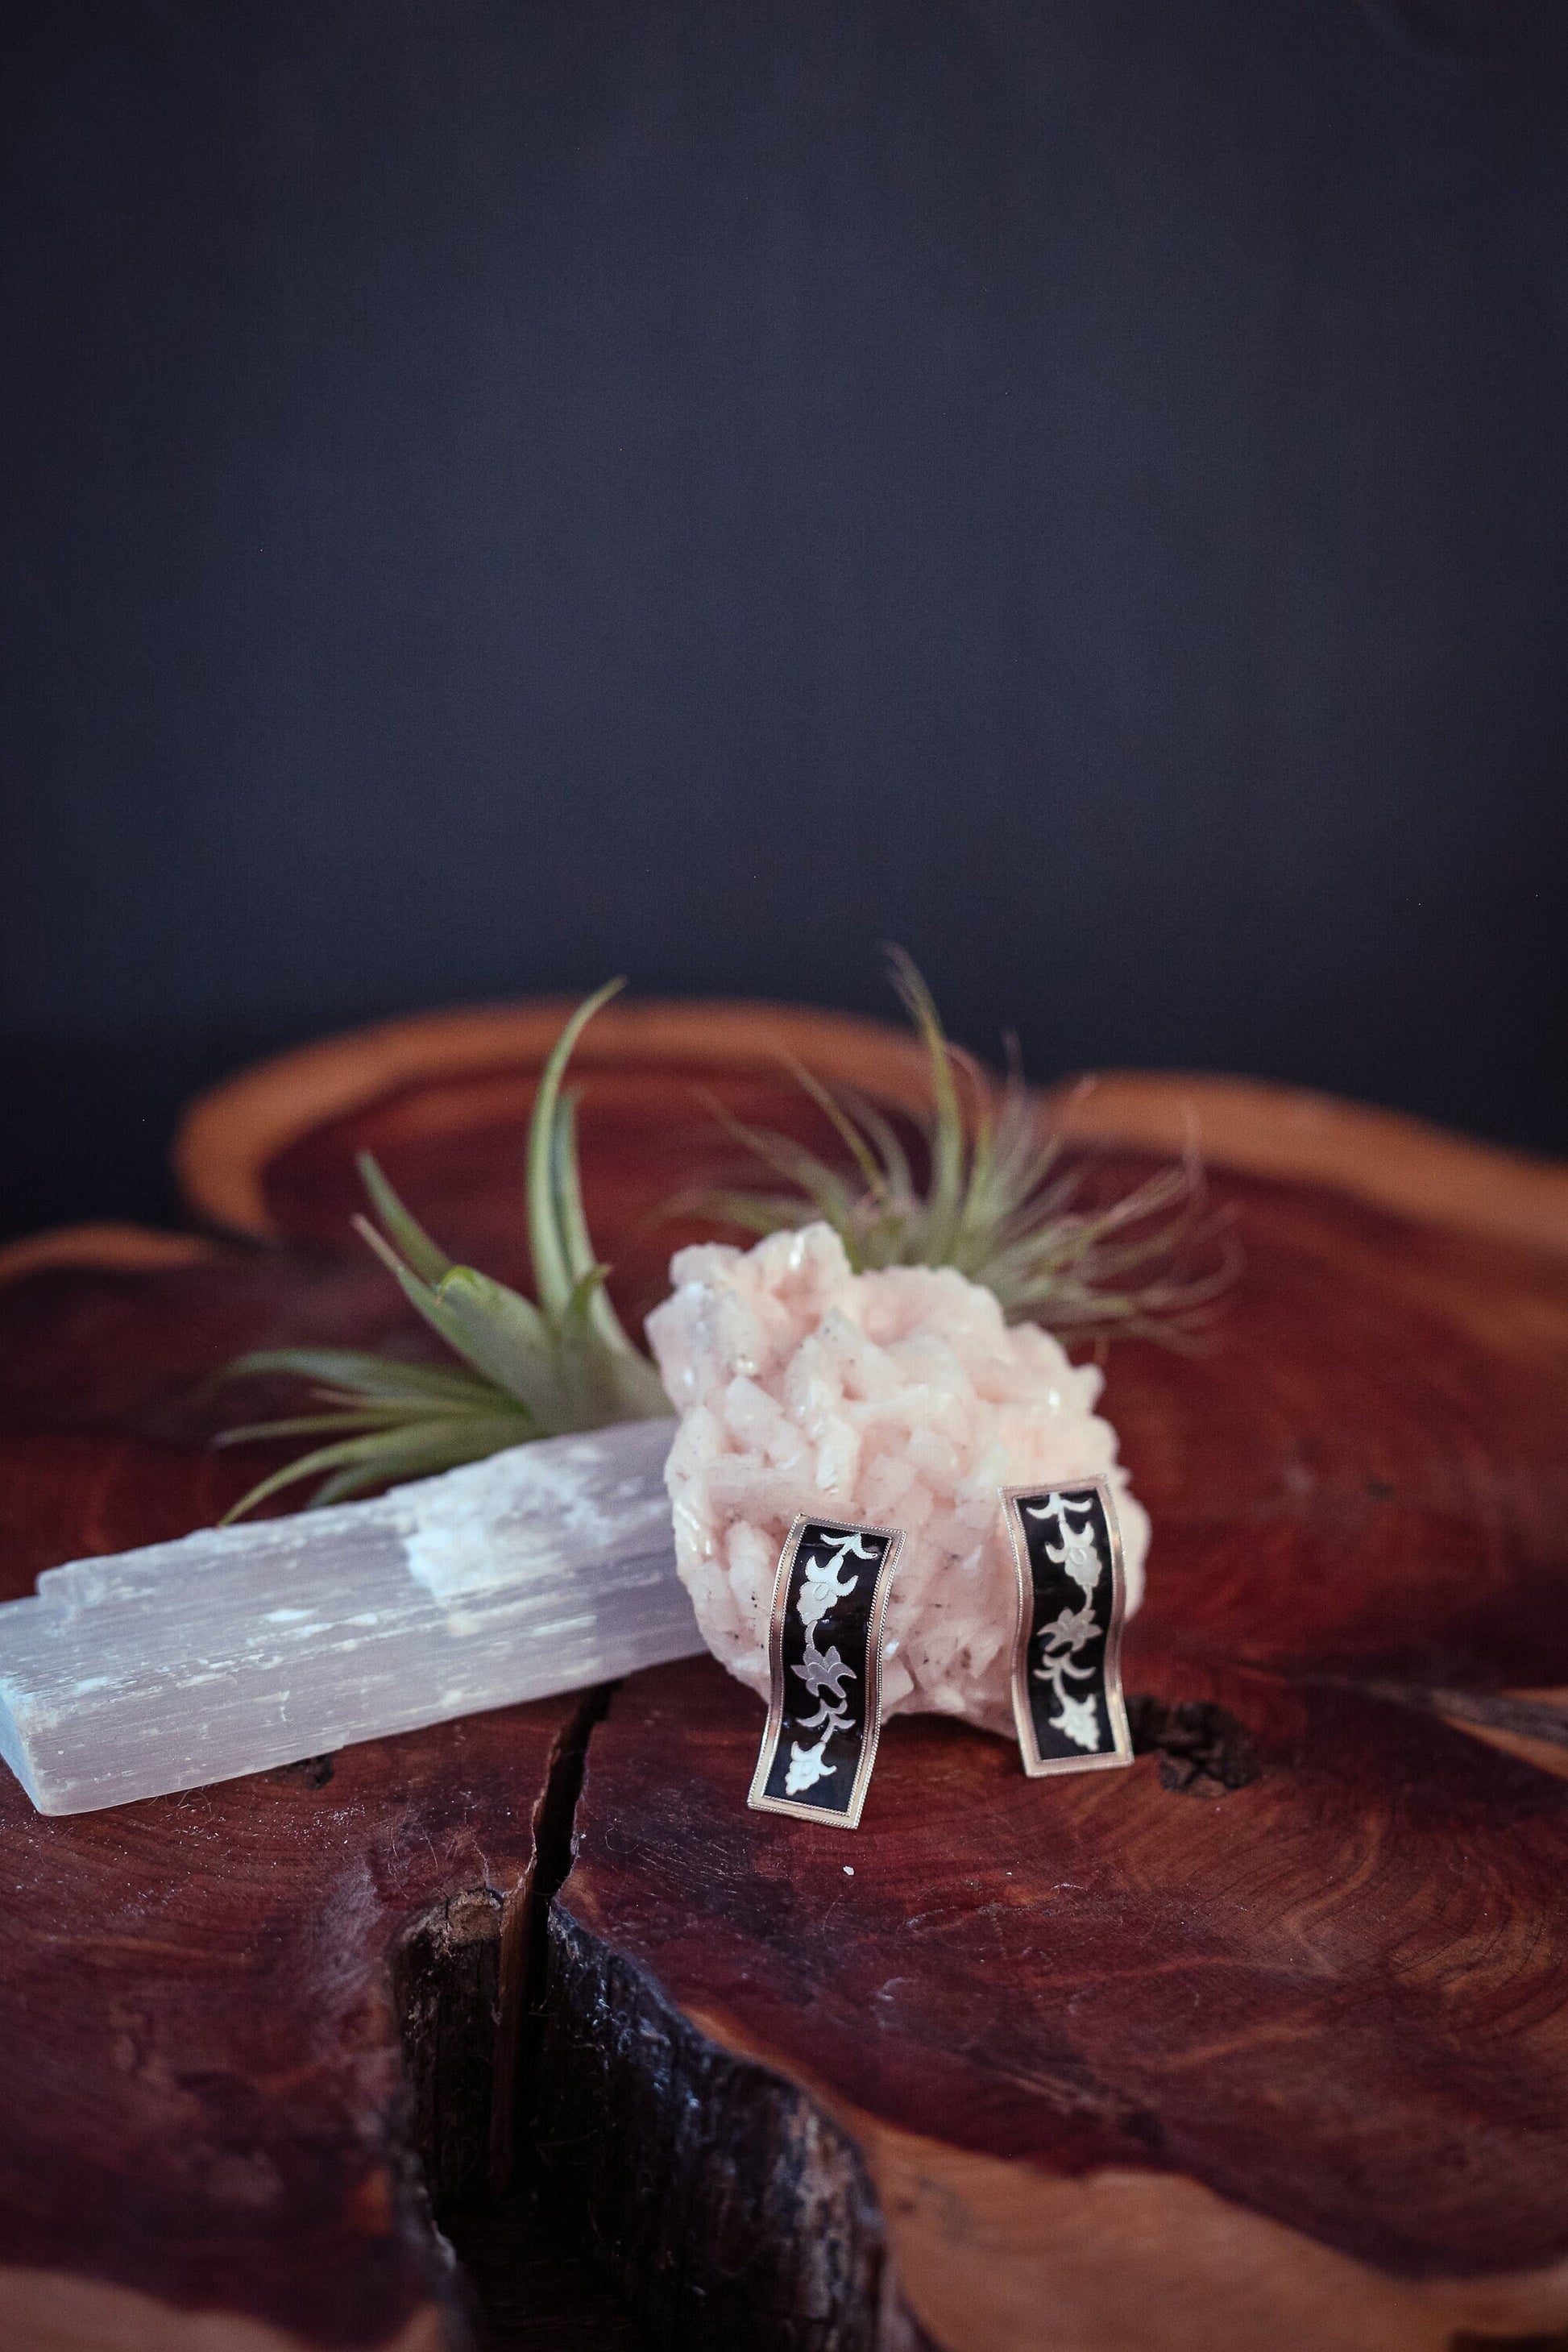 Sterling Silver with Black White Enamel Floral Ribbon Earrings - Vintage Silver Wave Earrings